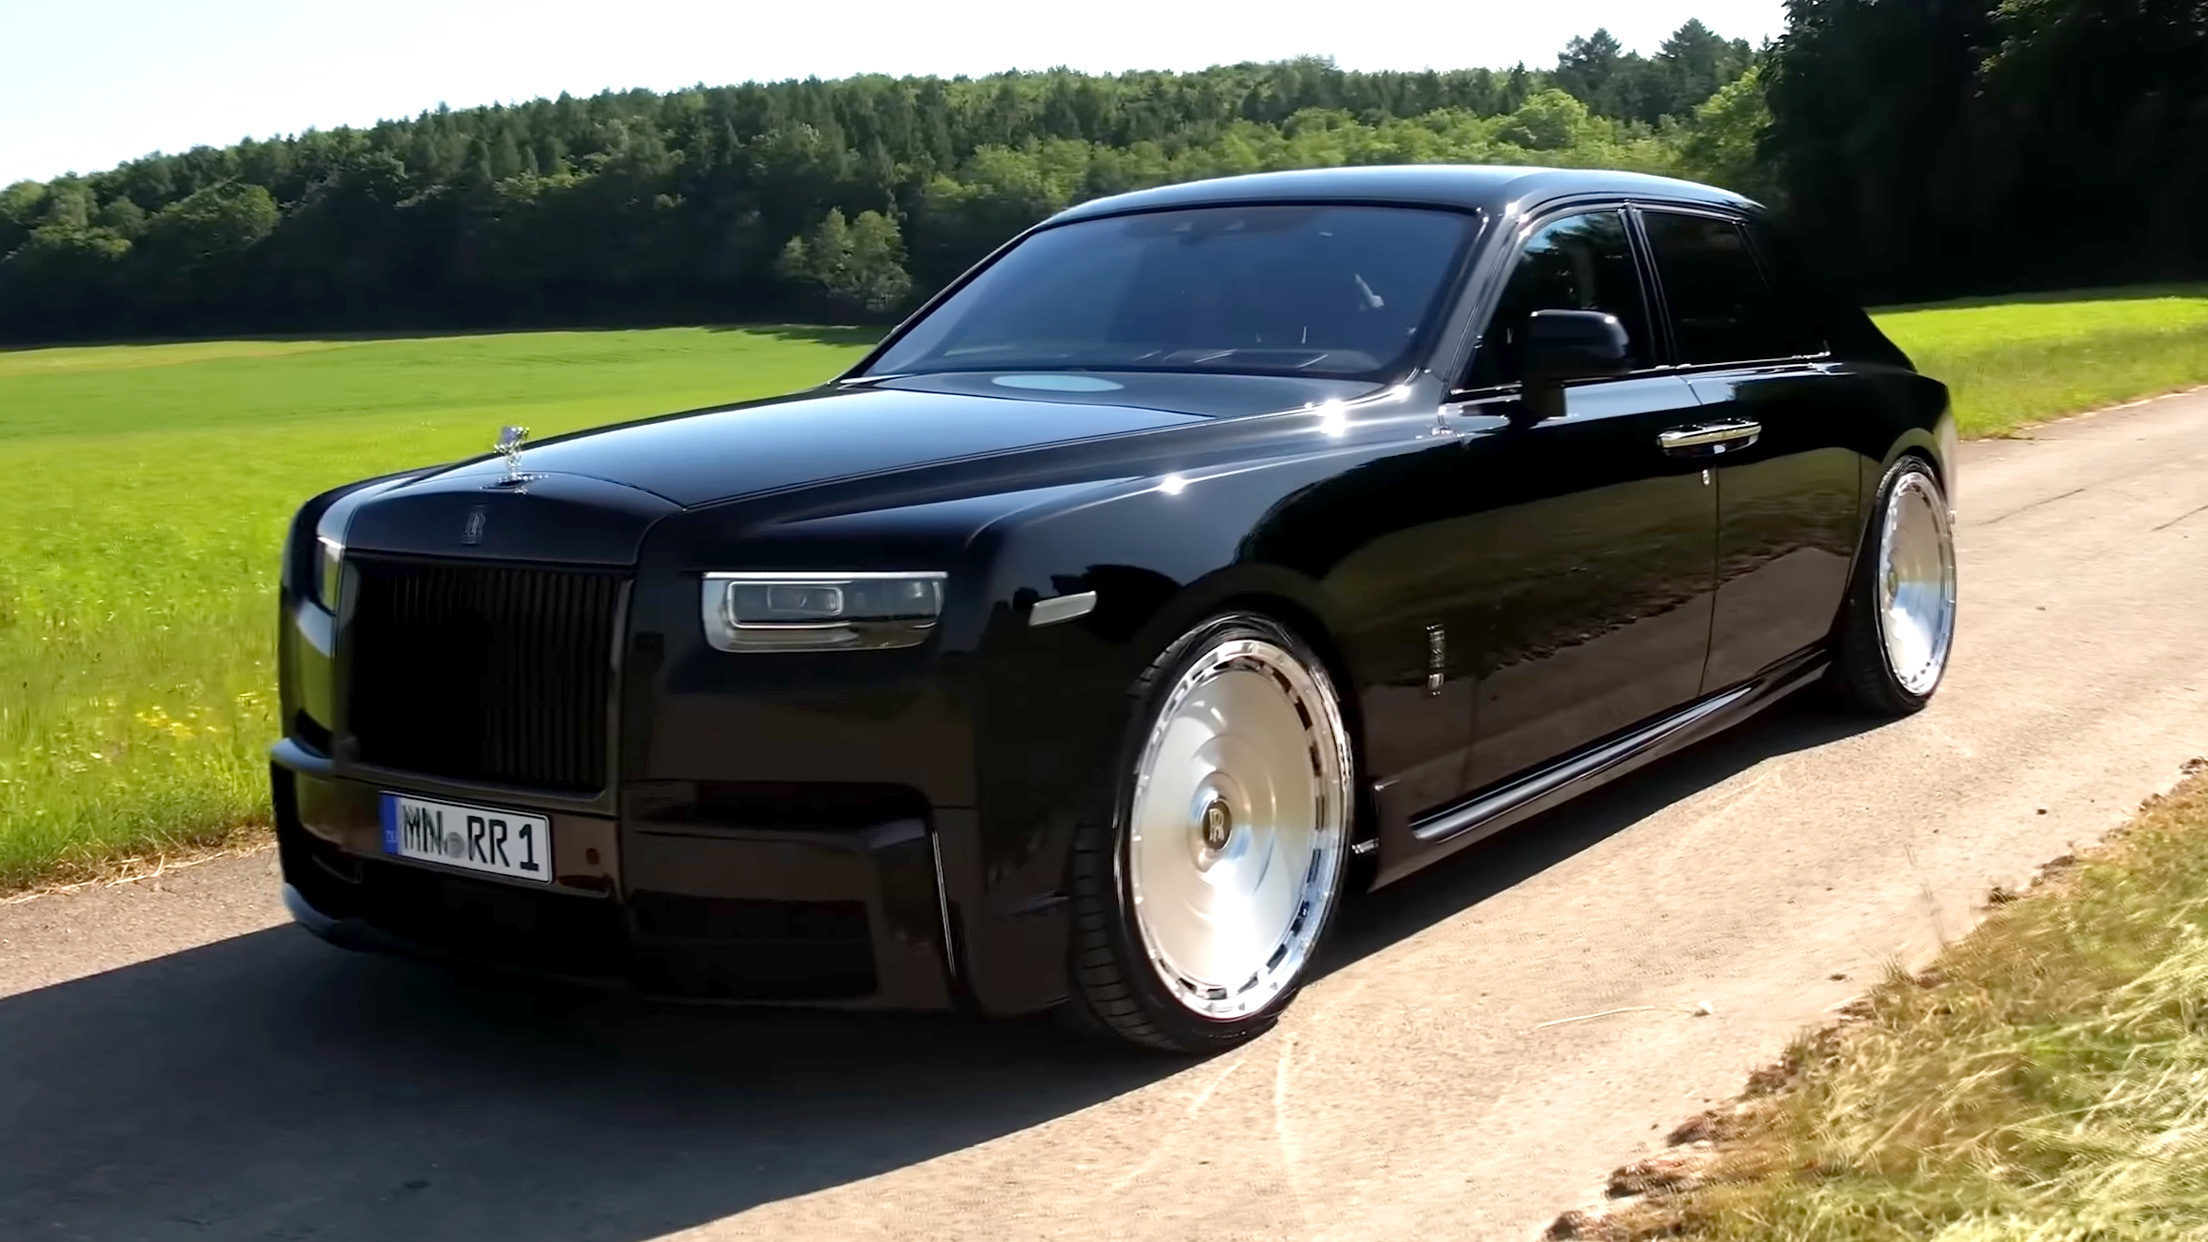 Spofec Rolls Royce Phantom Series II